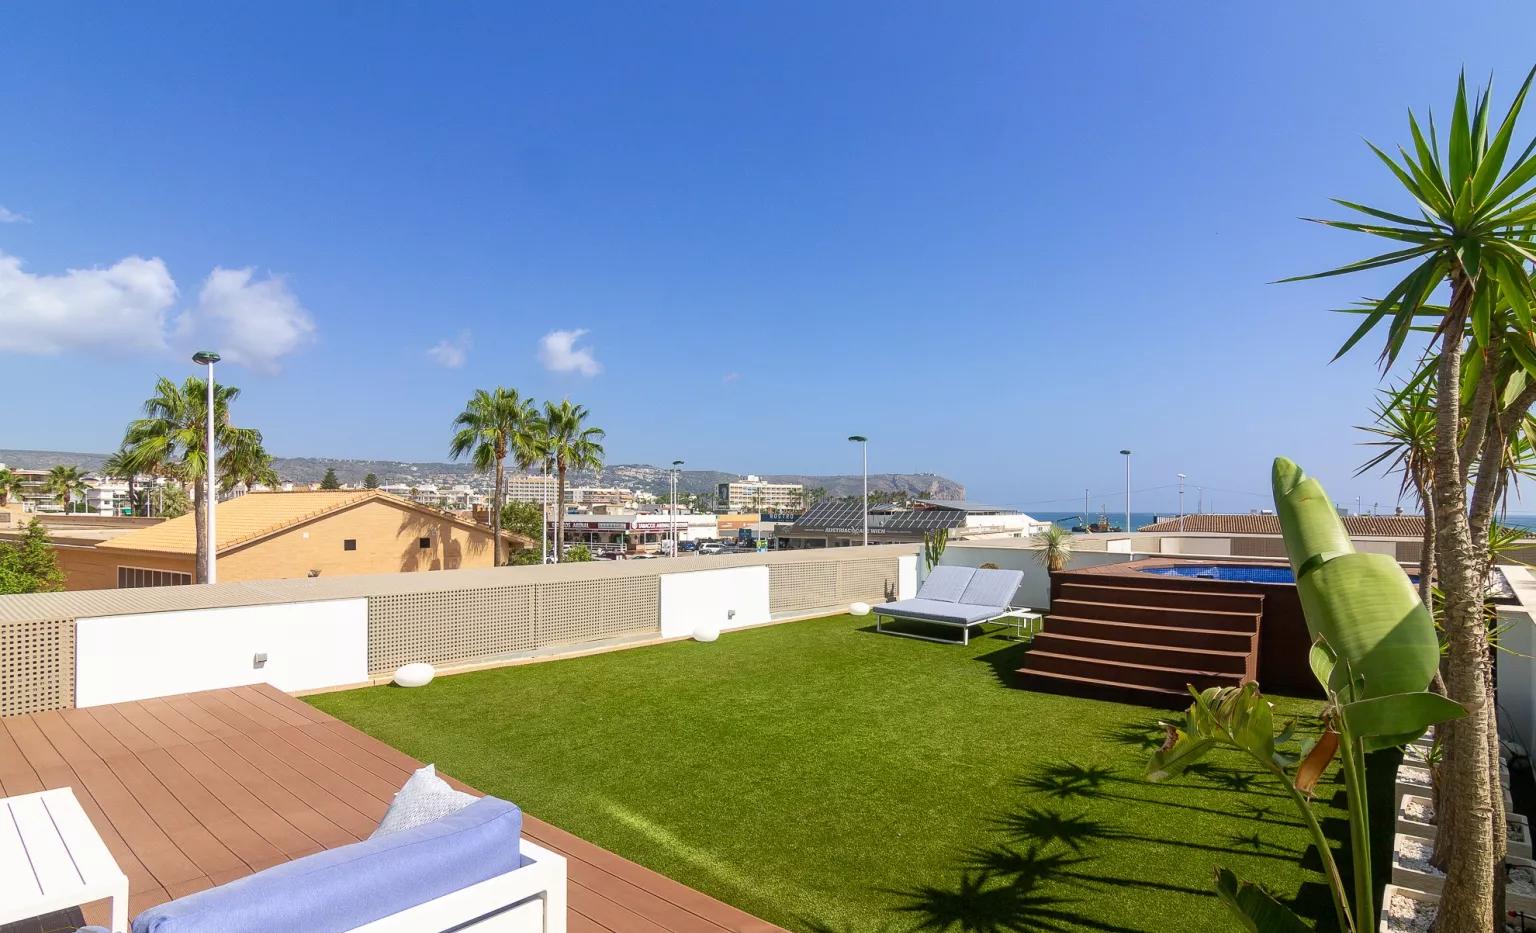 Wohnung zum Verkauf mit Meerblick, privatem Pool in Playa del Arenal - Javea